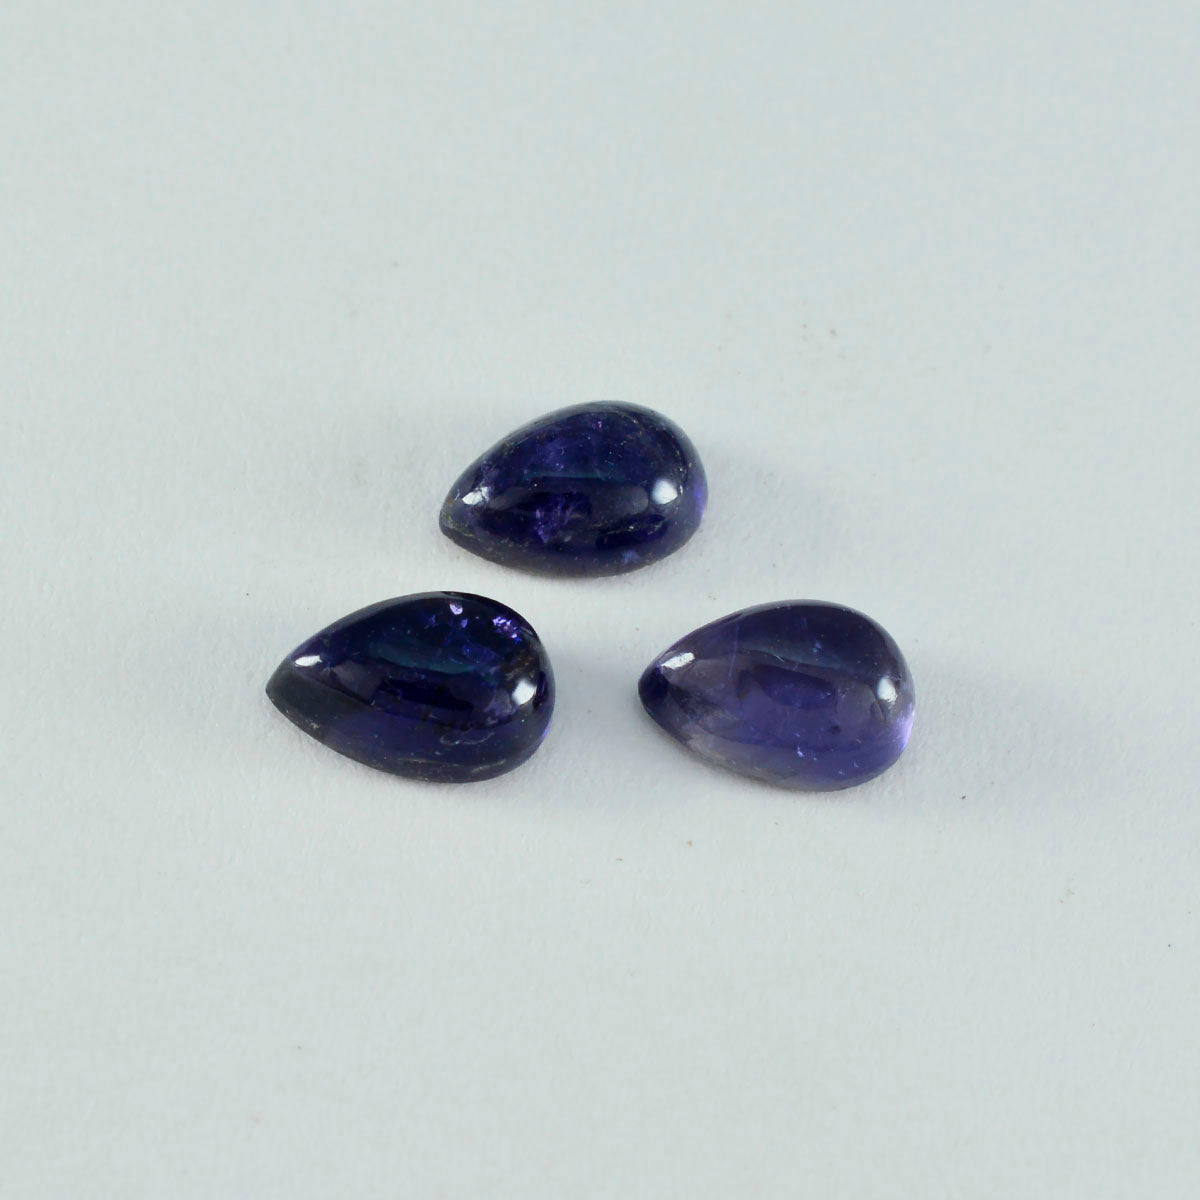 Riyogems 1PC Blue Iolite Cabochon 8x12 mm Pear Shape awesome Quality Loose Gems